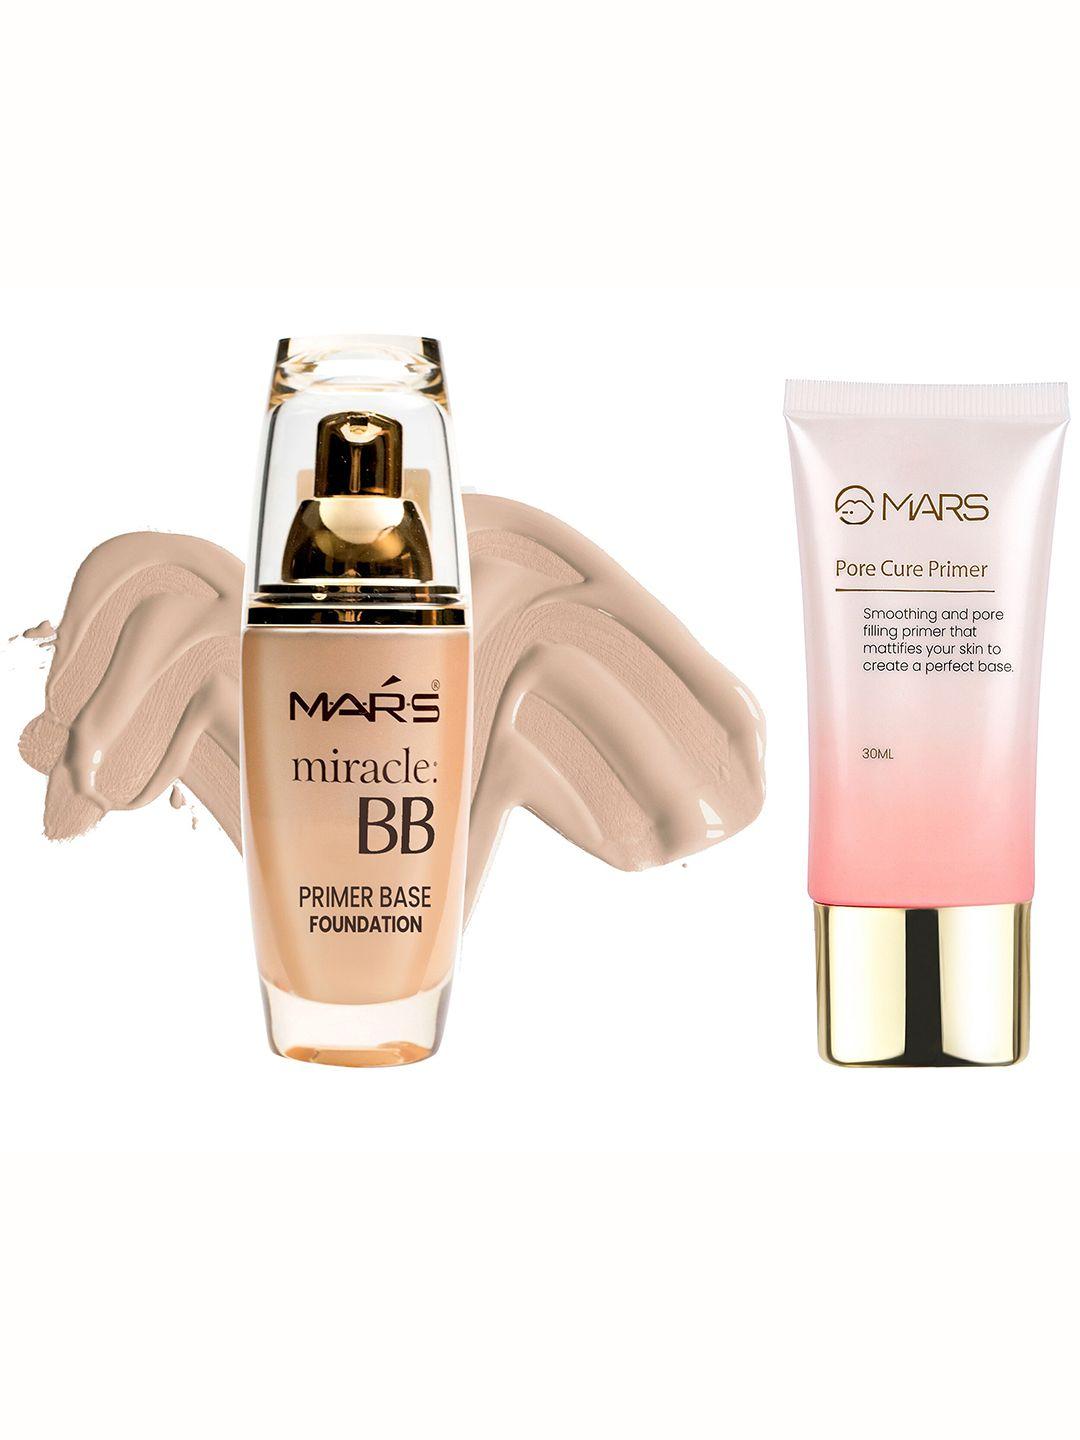 mars set of miracle bb primer base foundation - golden beige 60ml + pore cure primer 30 ml